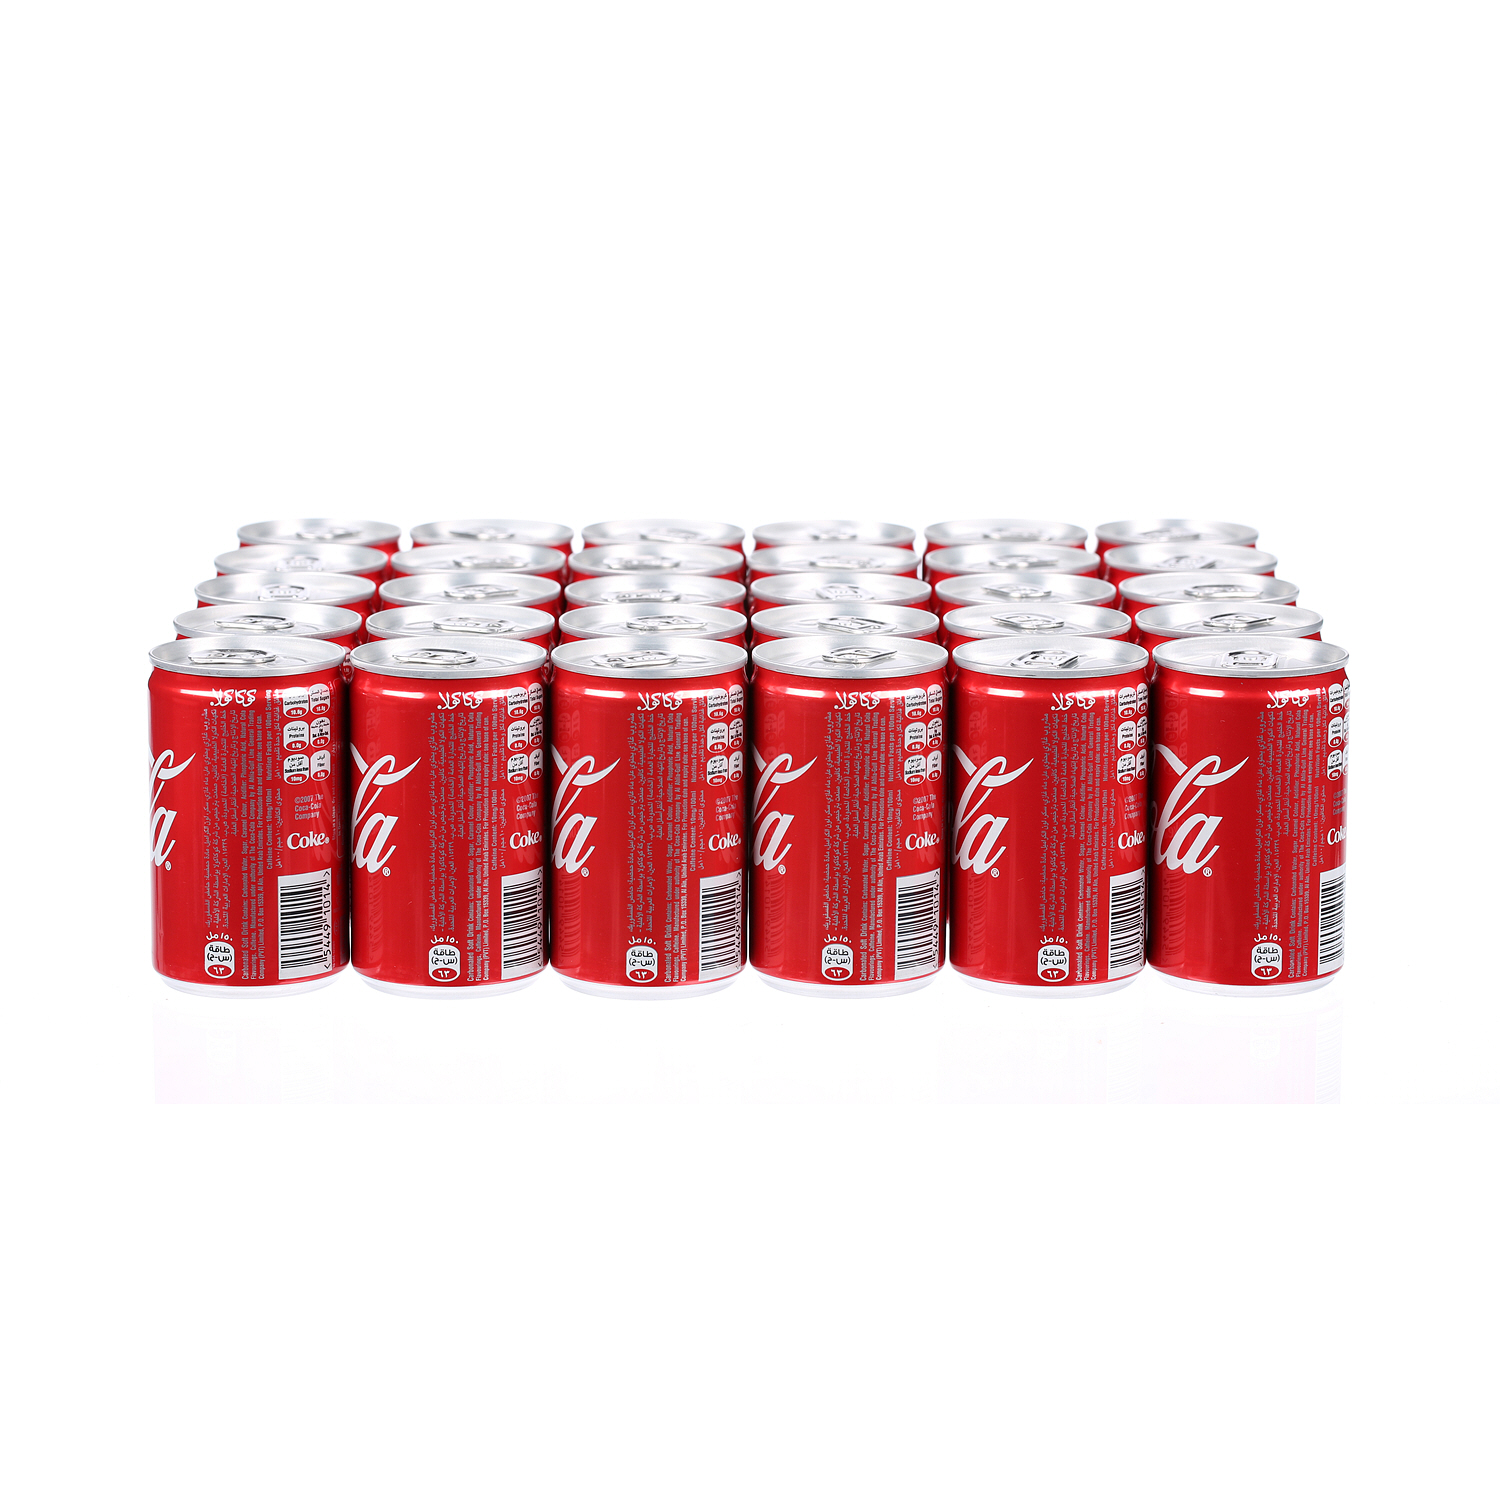 Coca-Cola Can 150 ml × 30 Piece